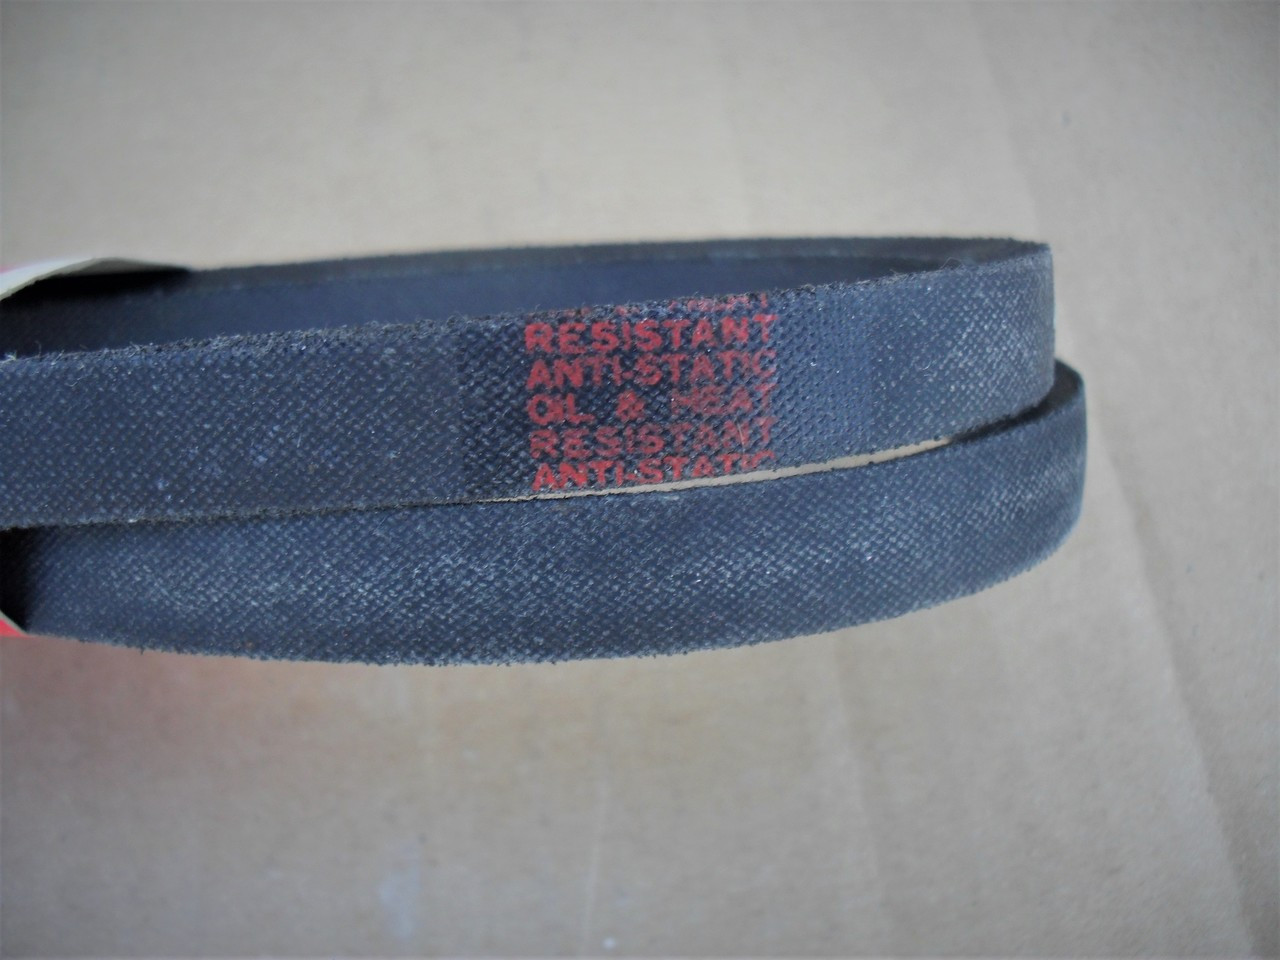 Roto Tiller Drive Belt for MTD 754-0434 954-0434 Craftsman Huskee Master Cut White Oil and Heat Resistant rototiller